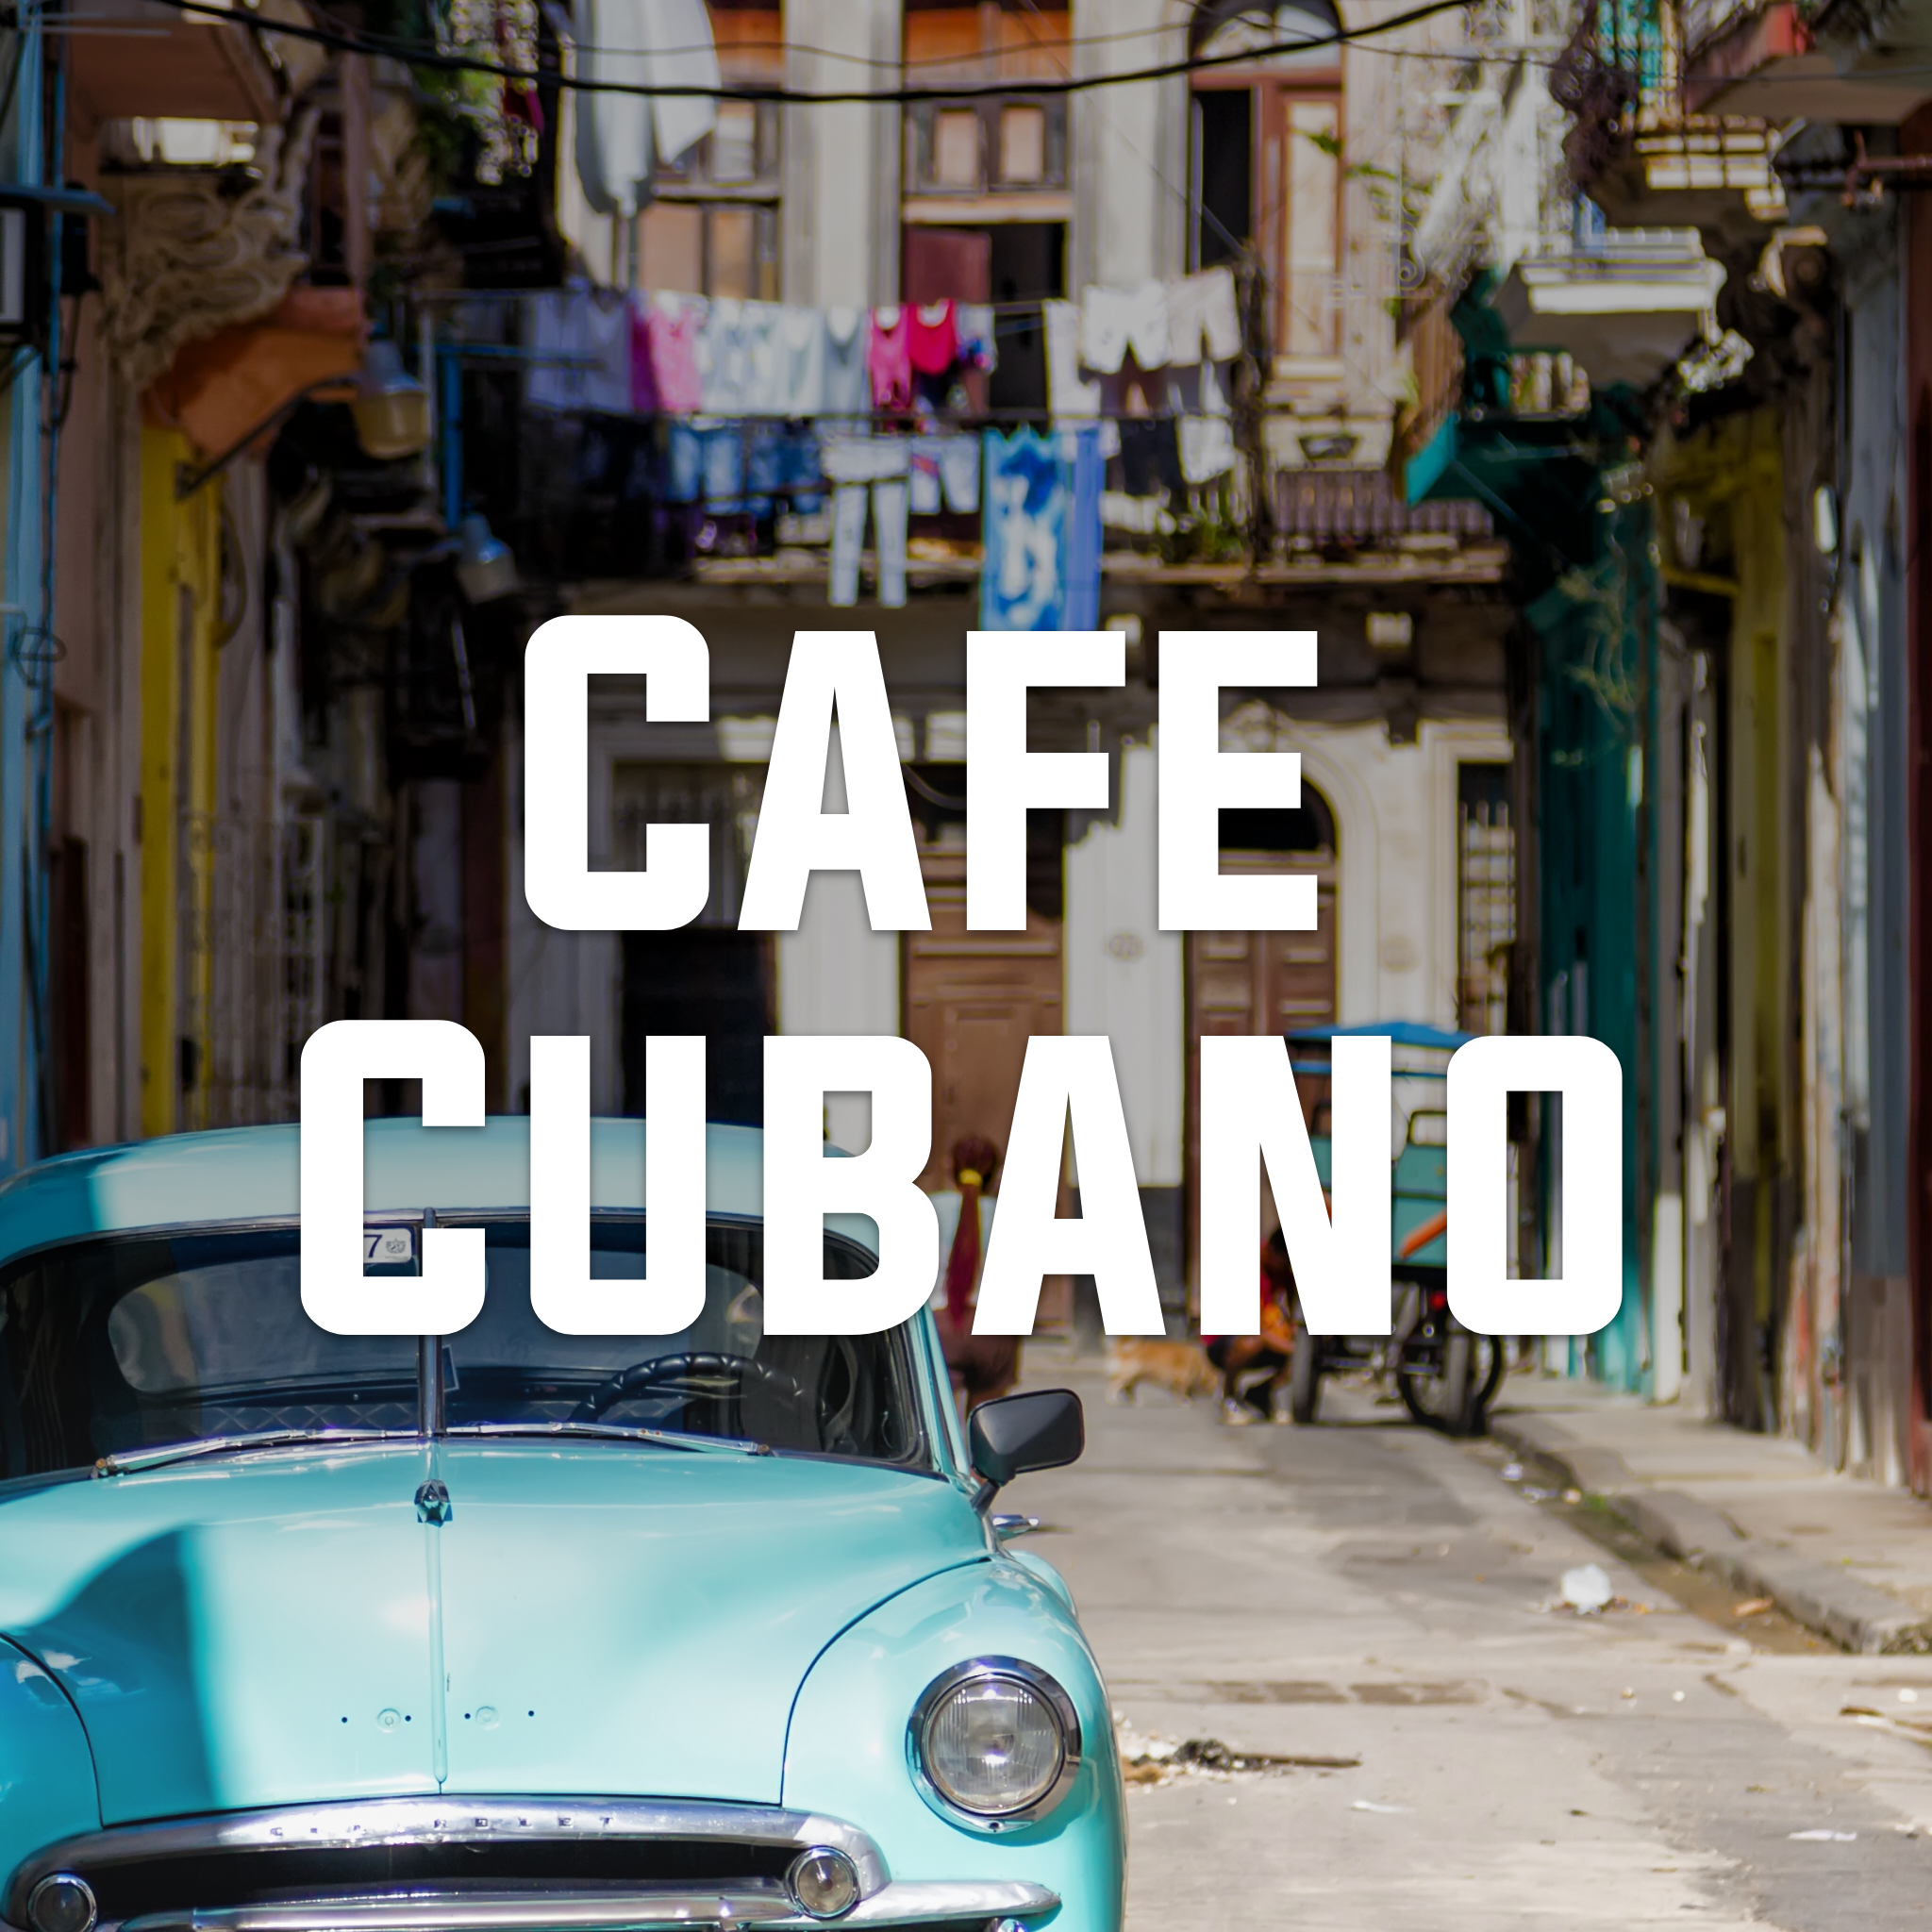 Cuban Coffee On The Go,,, Cafecito !!